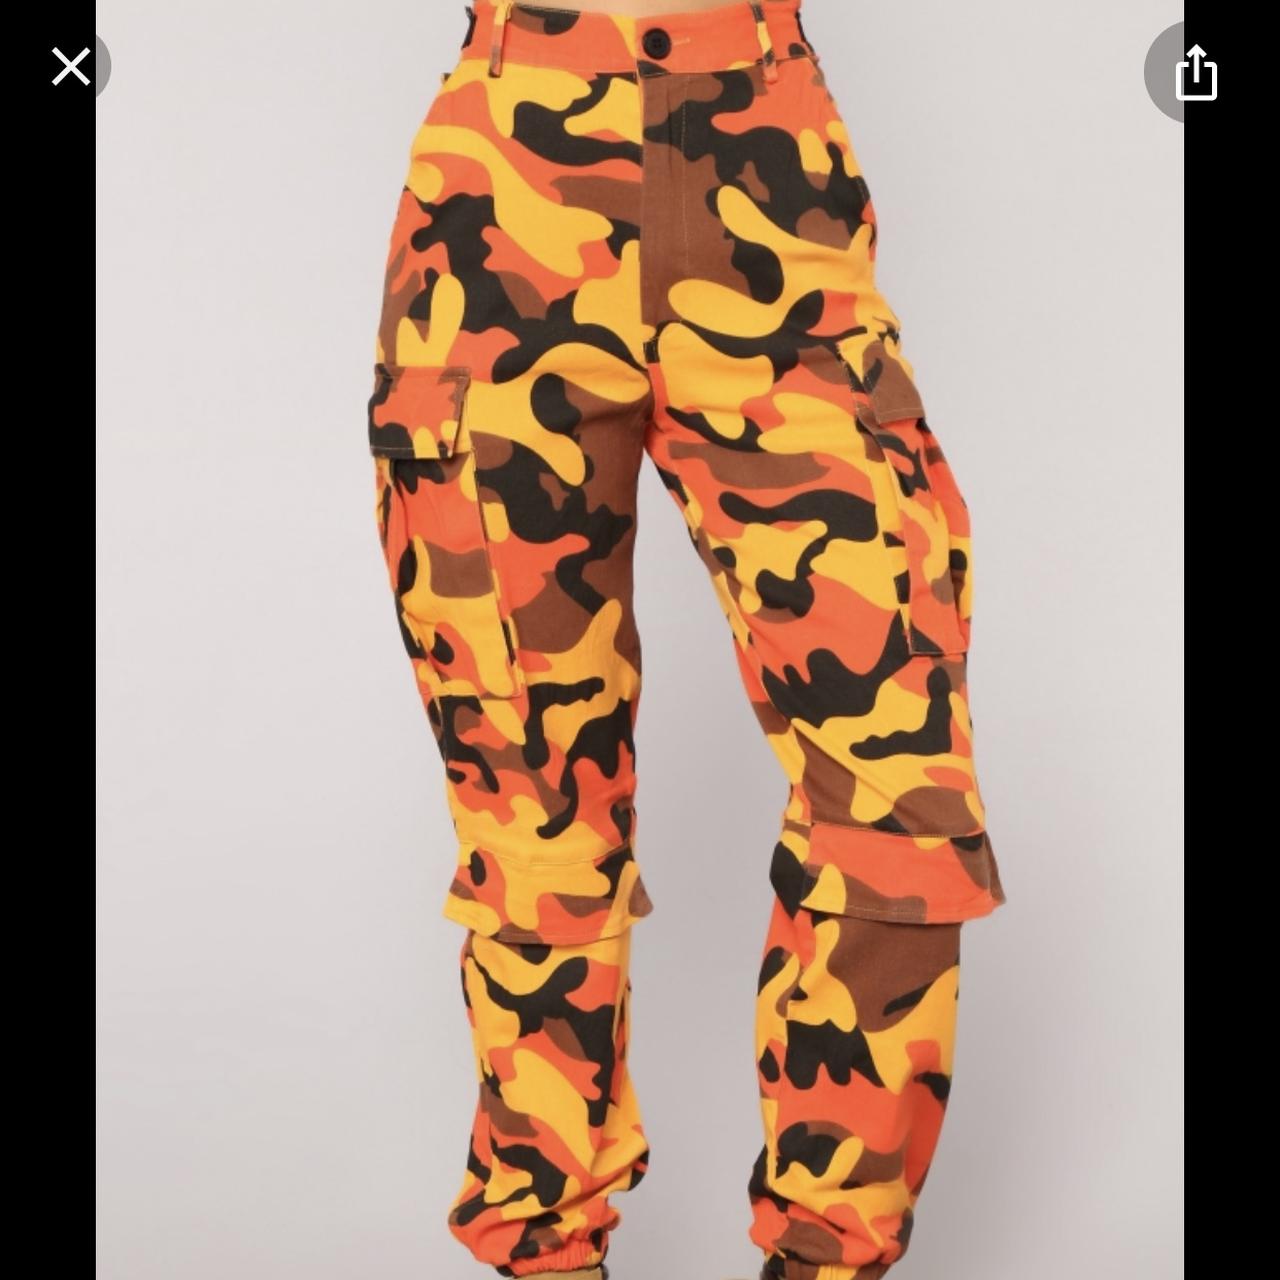 Buy Orange Camo Pants at Army Surplus World